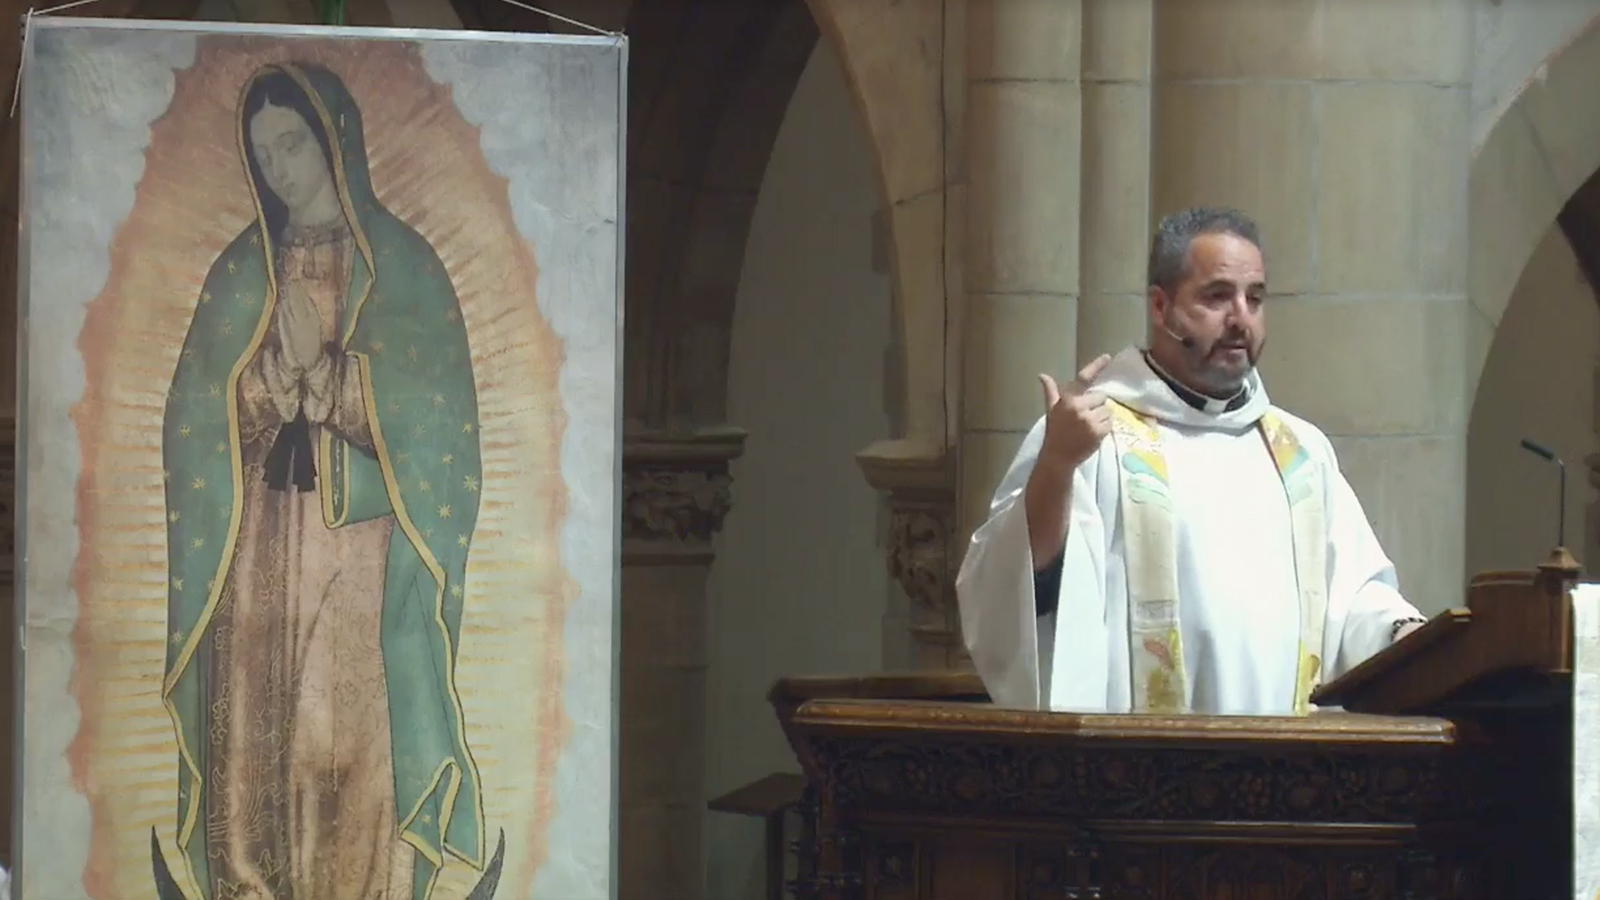 The Rev. Alfredo Feregrino preaches at All Saints Episcopal Church in Pasadena, California. Video screen grab